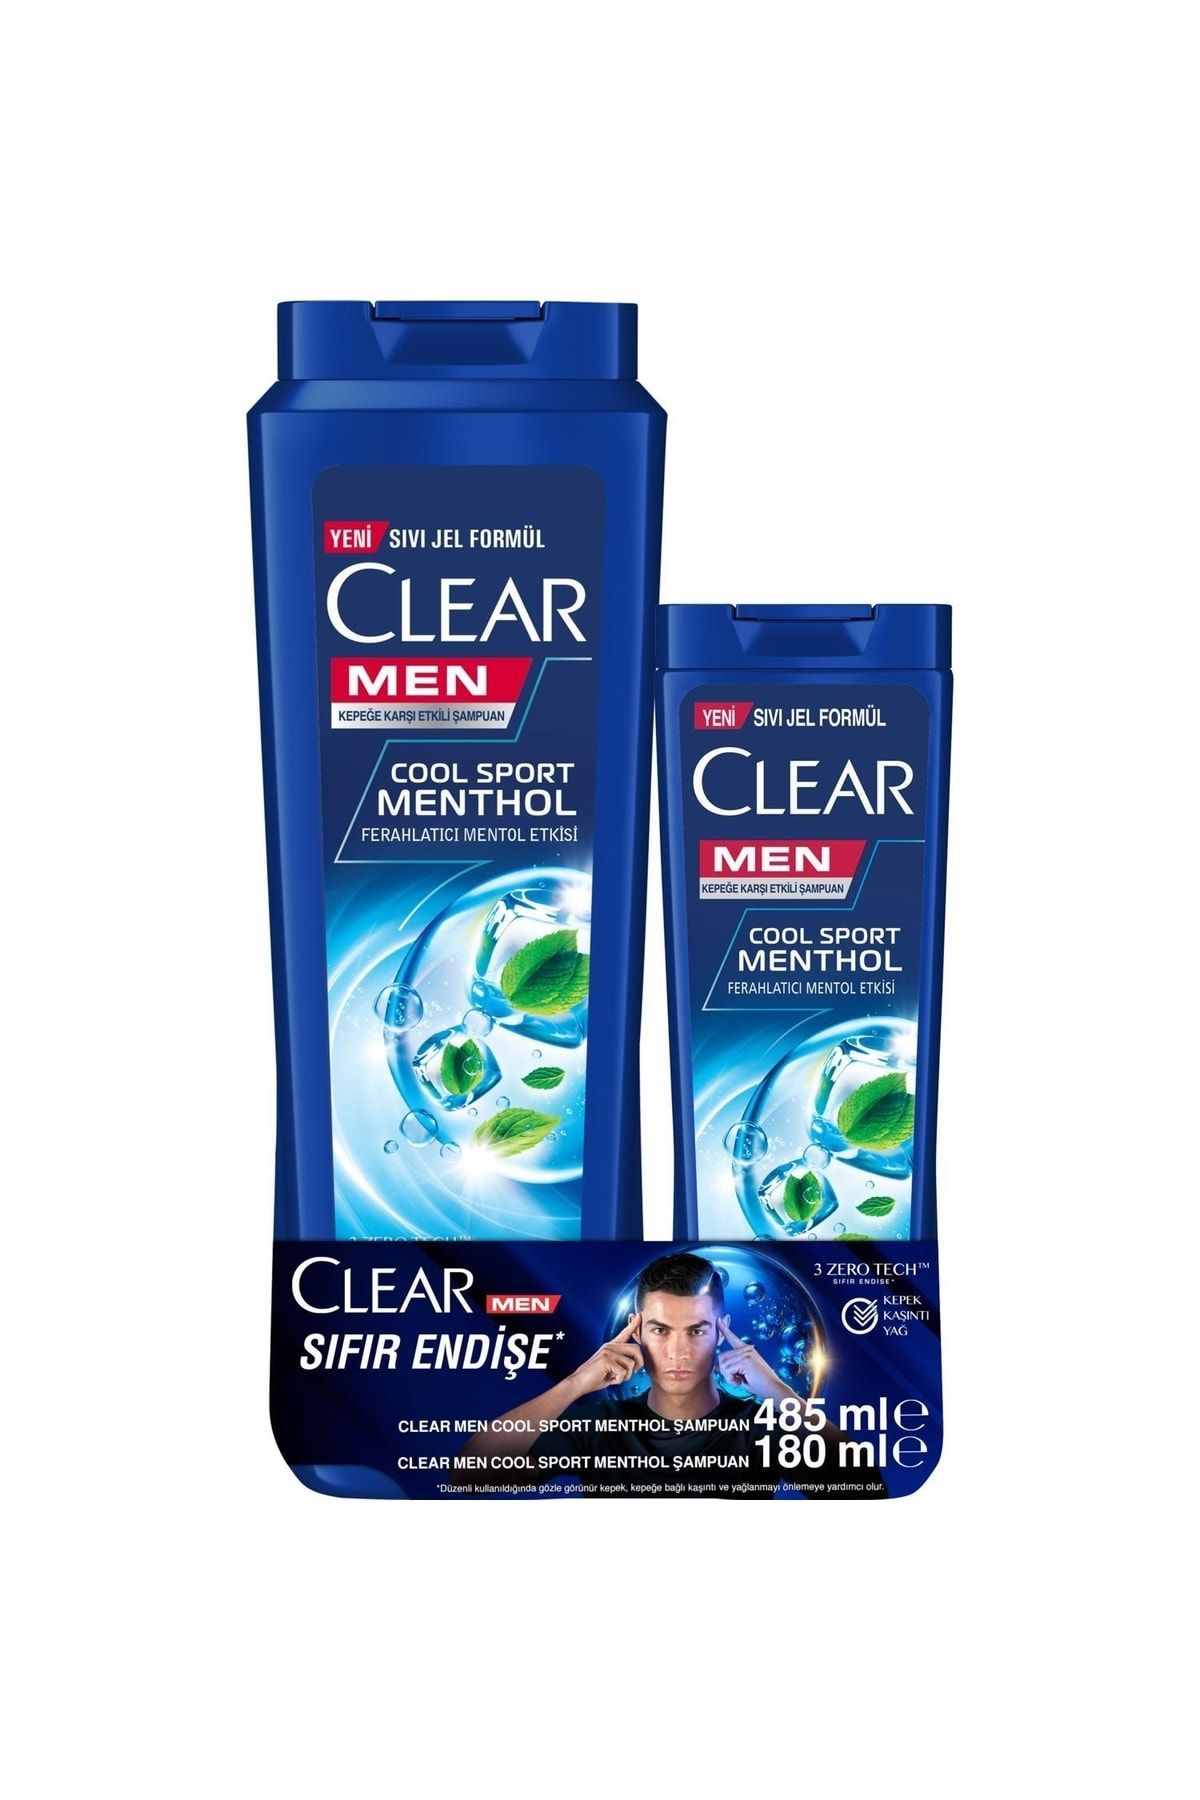 Clear Men Kepeğe Karşı Etkili Şampuan Cool Sport Mentol Etkisi 485ml+180ml